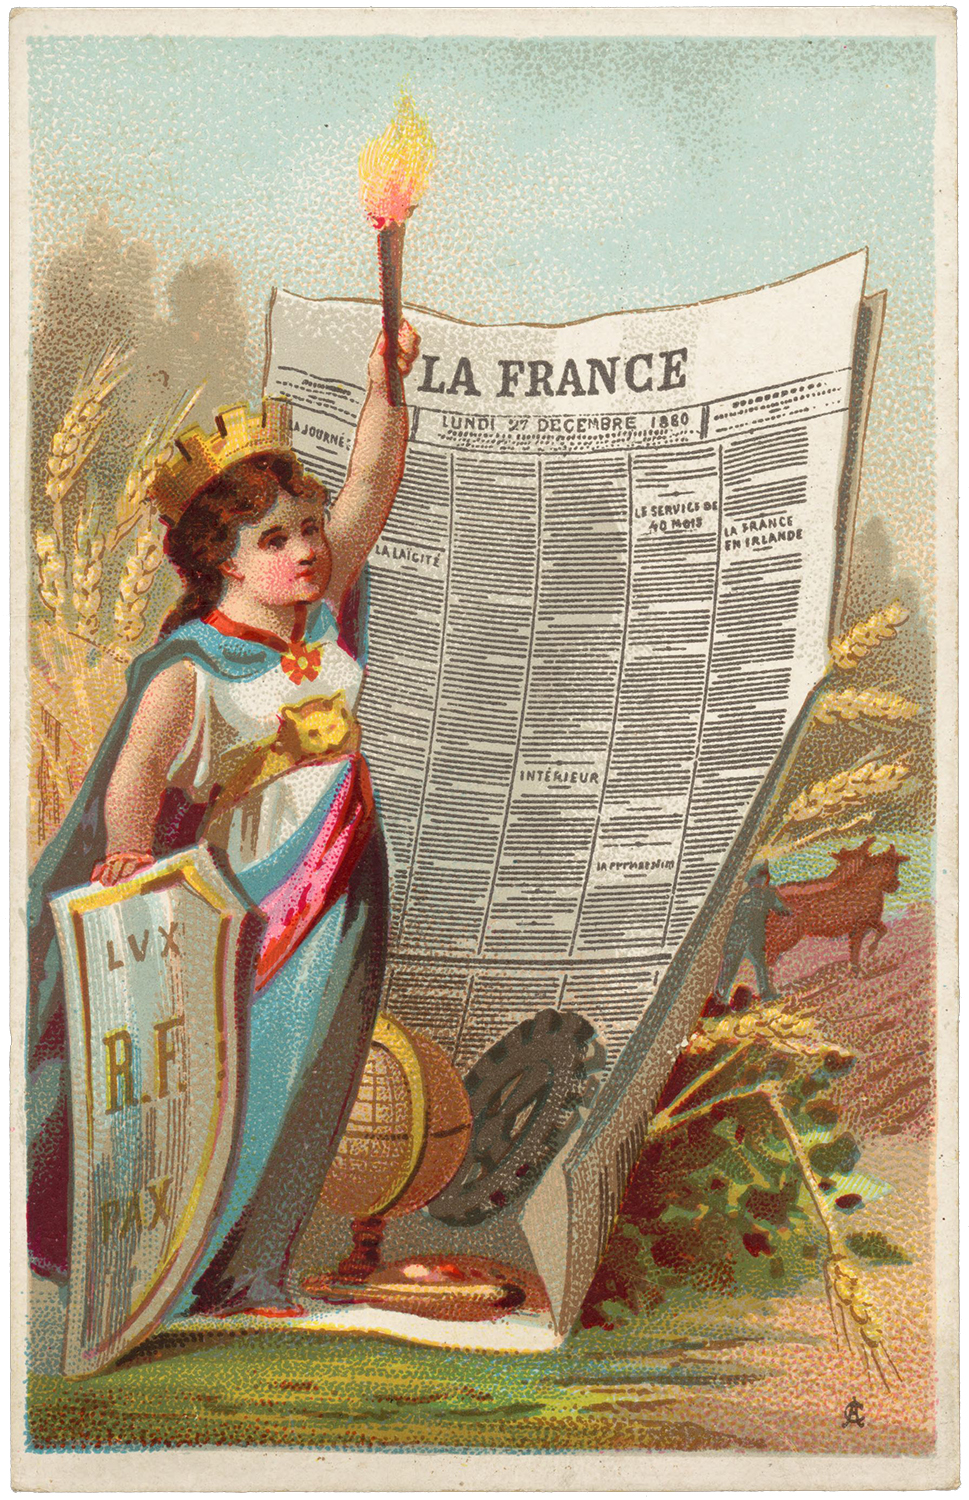 La France Card